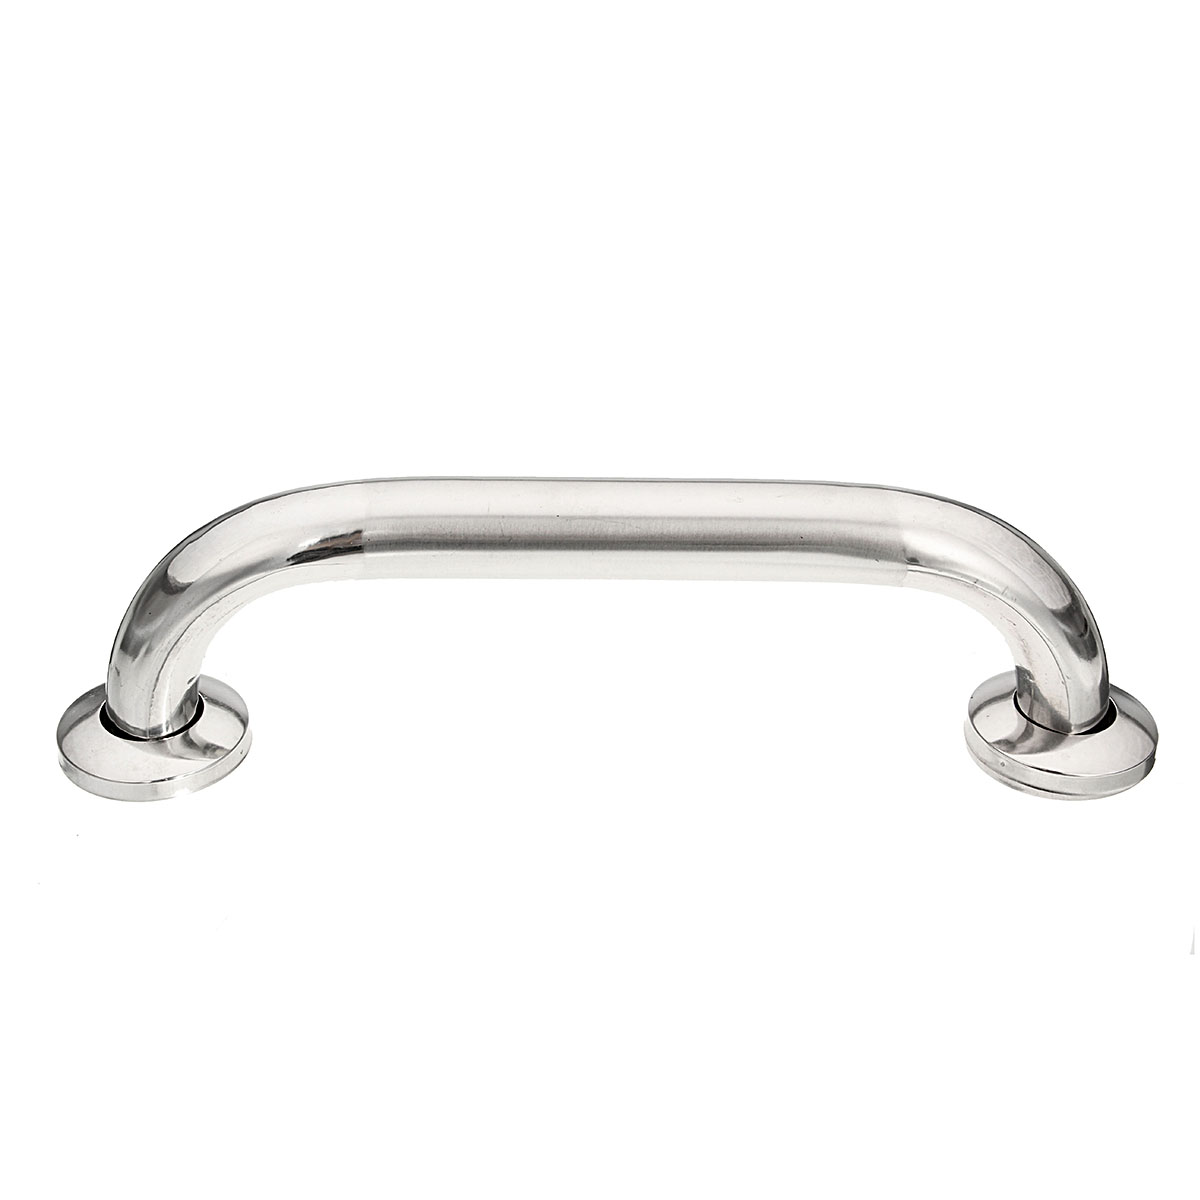 Stainless-Steel-Safety-Bath-Bathroom-Shower-Tub-Hand-Grips-Grab-Bar-Handle-25cm-1273274